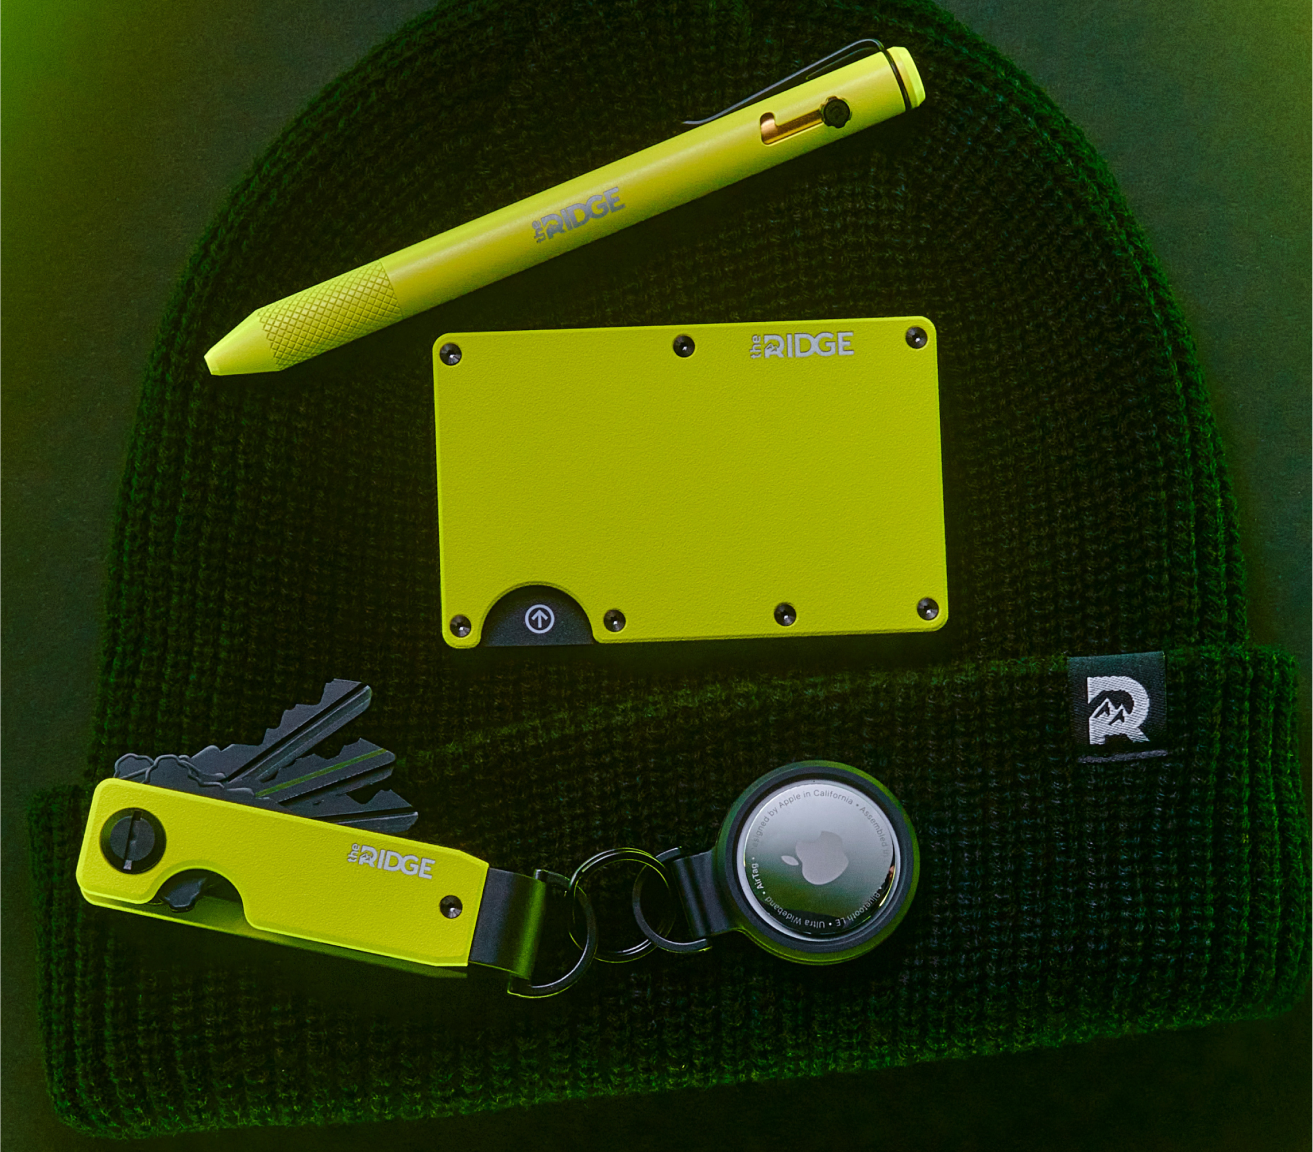 ridge hyper lime keycase pen and wallet